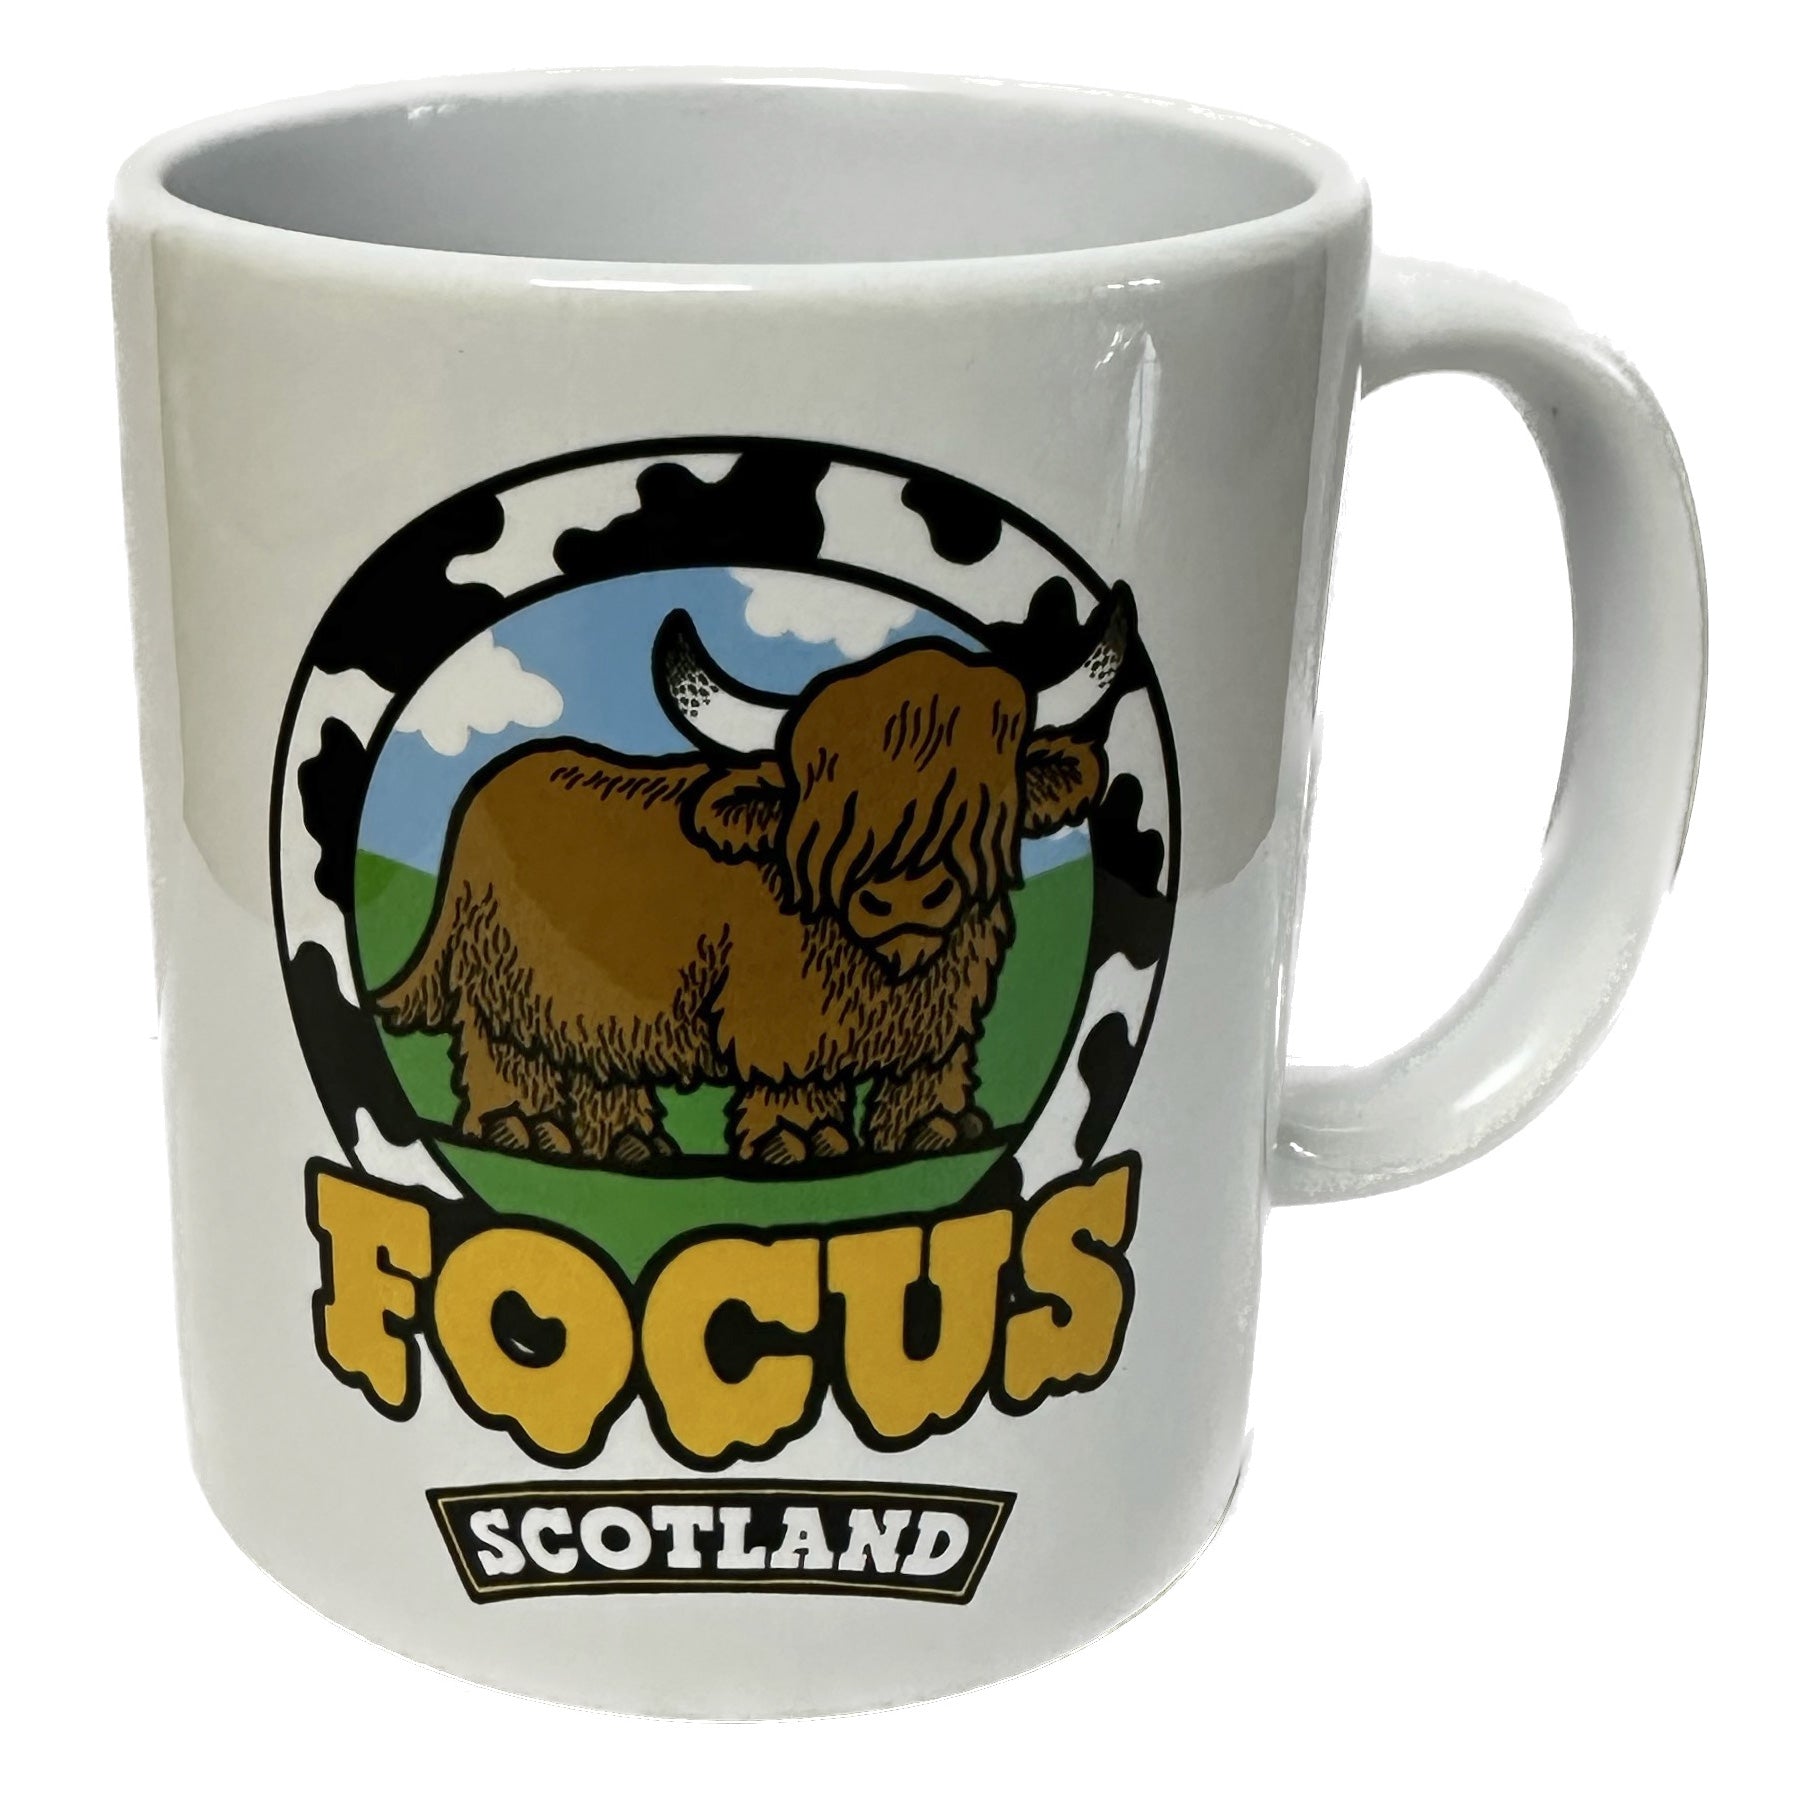 Focus Melted Coo Coffee Mug